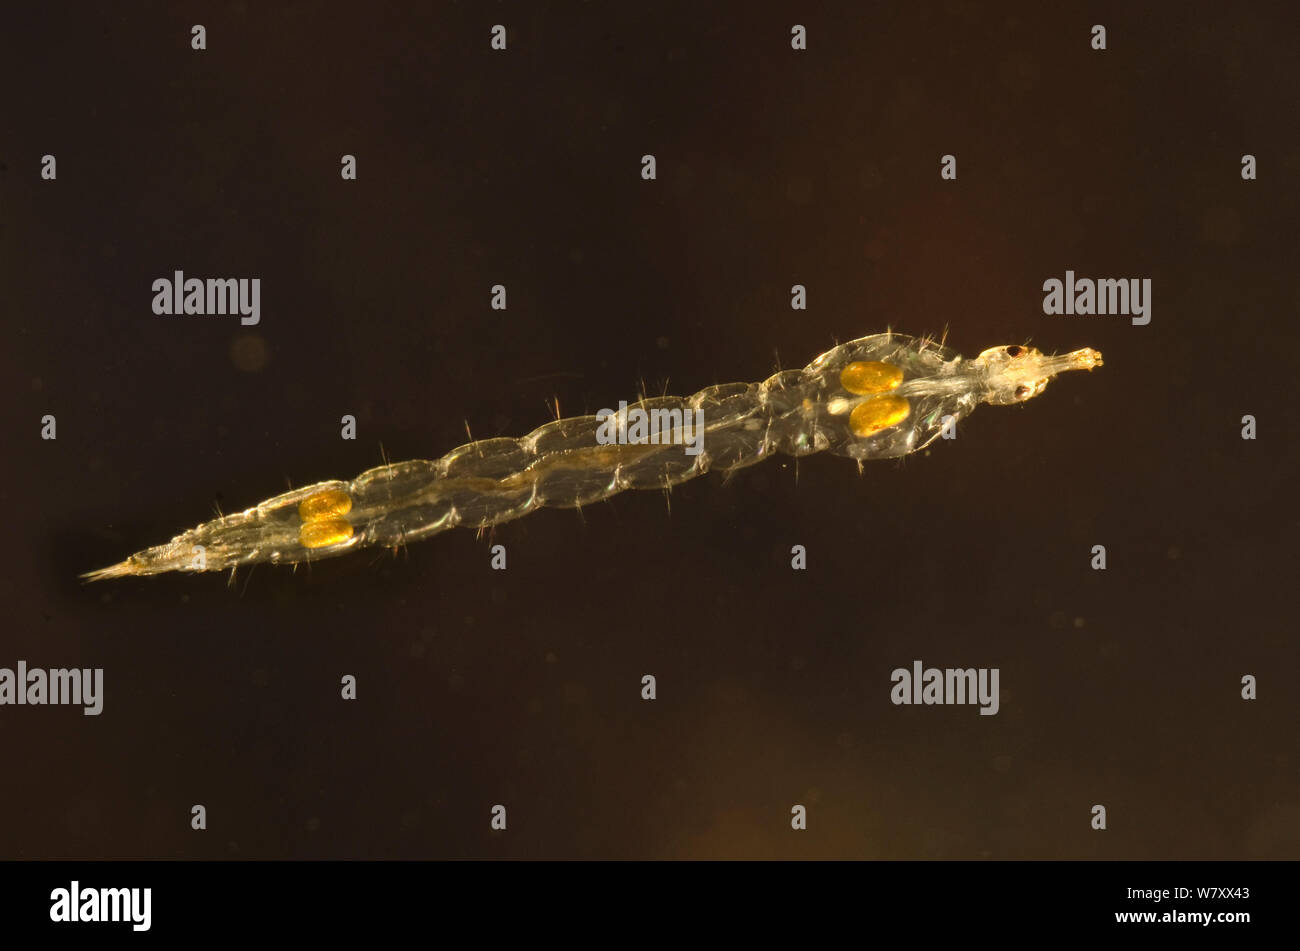 Phantom midge (Chaoborus flavicans) larva, dorsal view, Europe, February. Controlled conditions. Image taken using digital focus stacking. Stock Photo